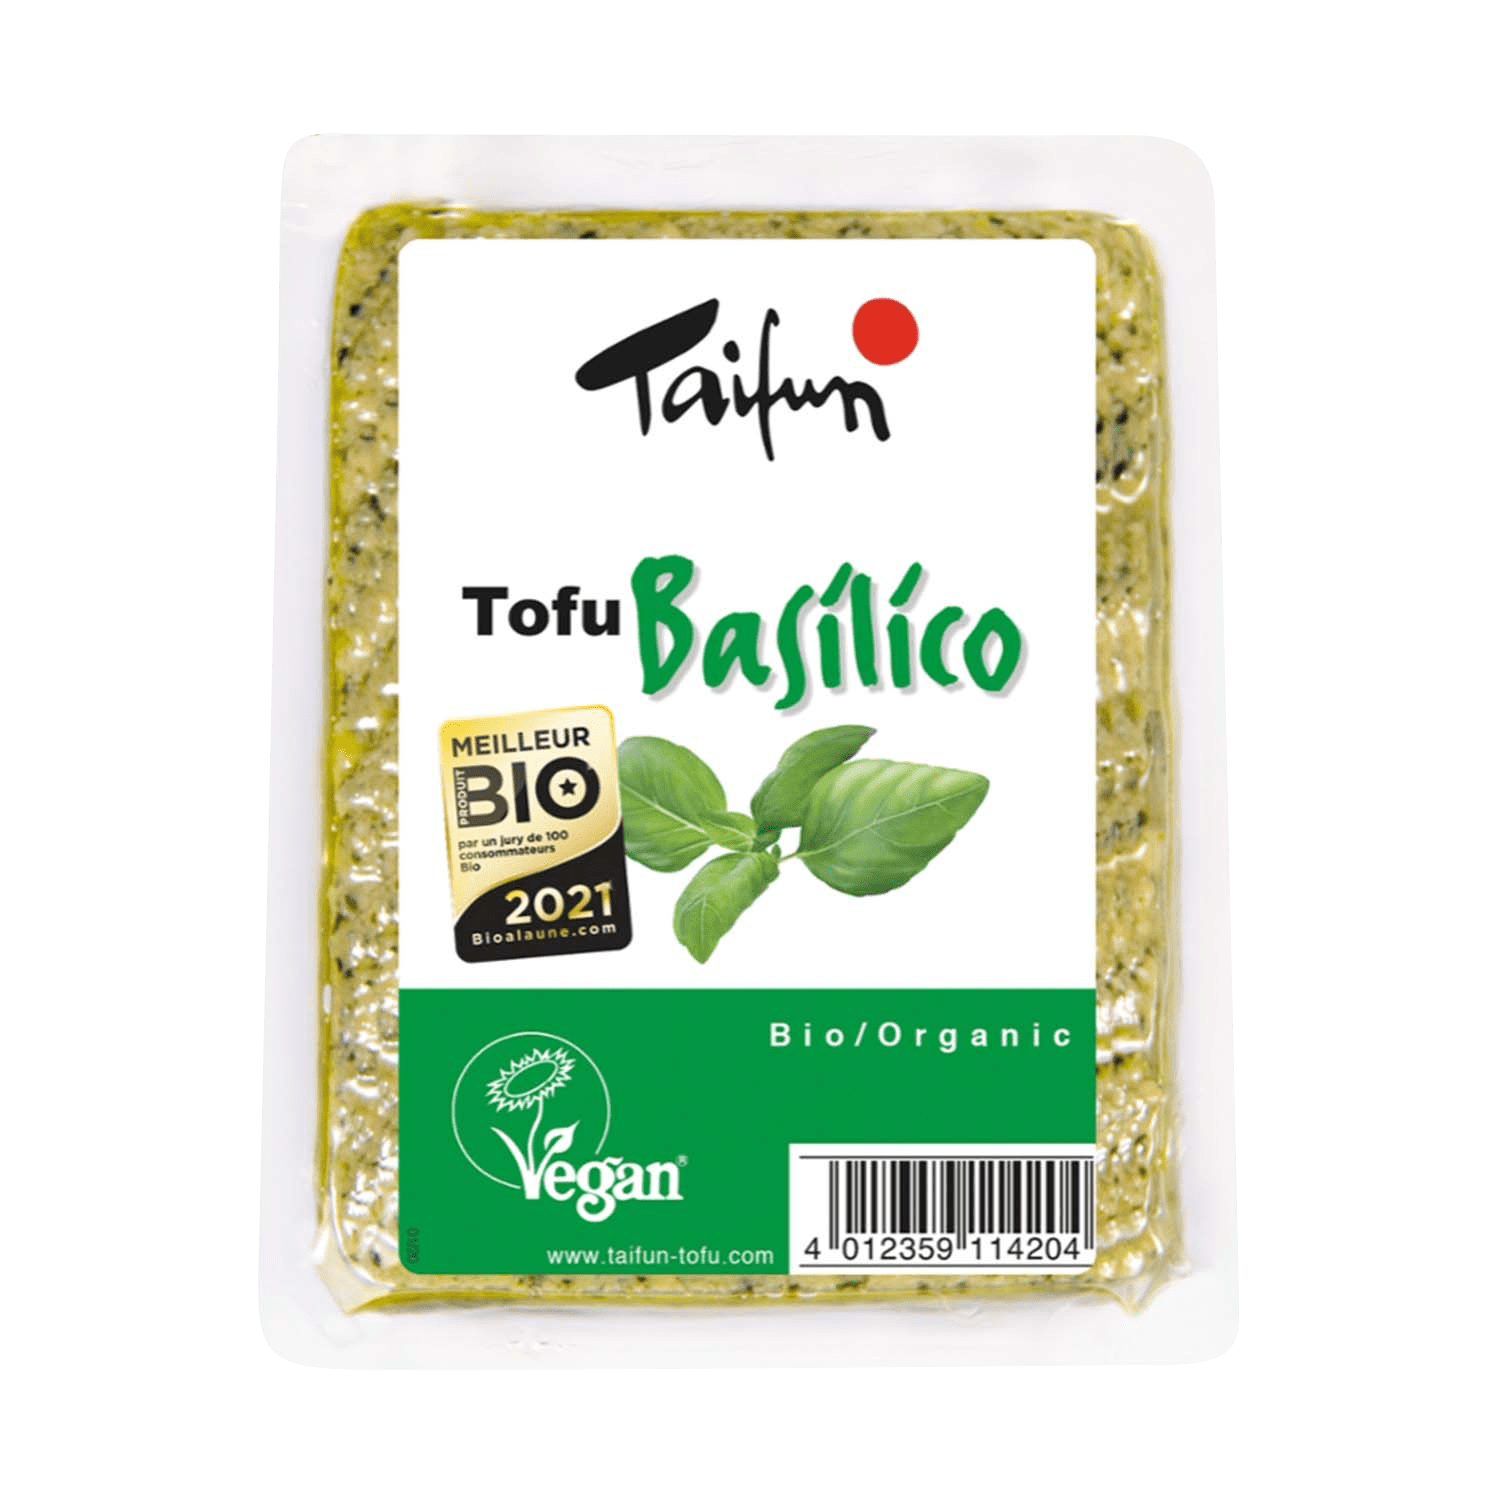 Tofu Basilico, Organic, 200g